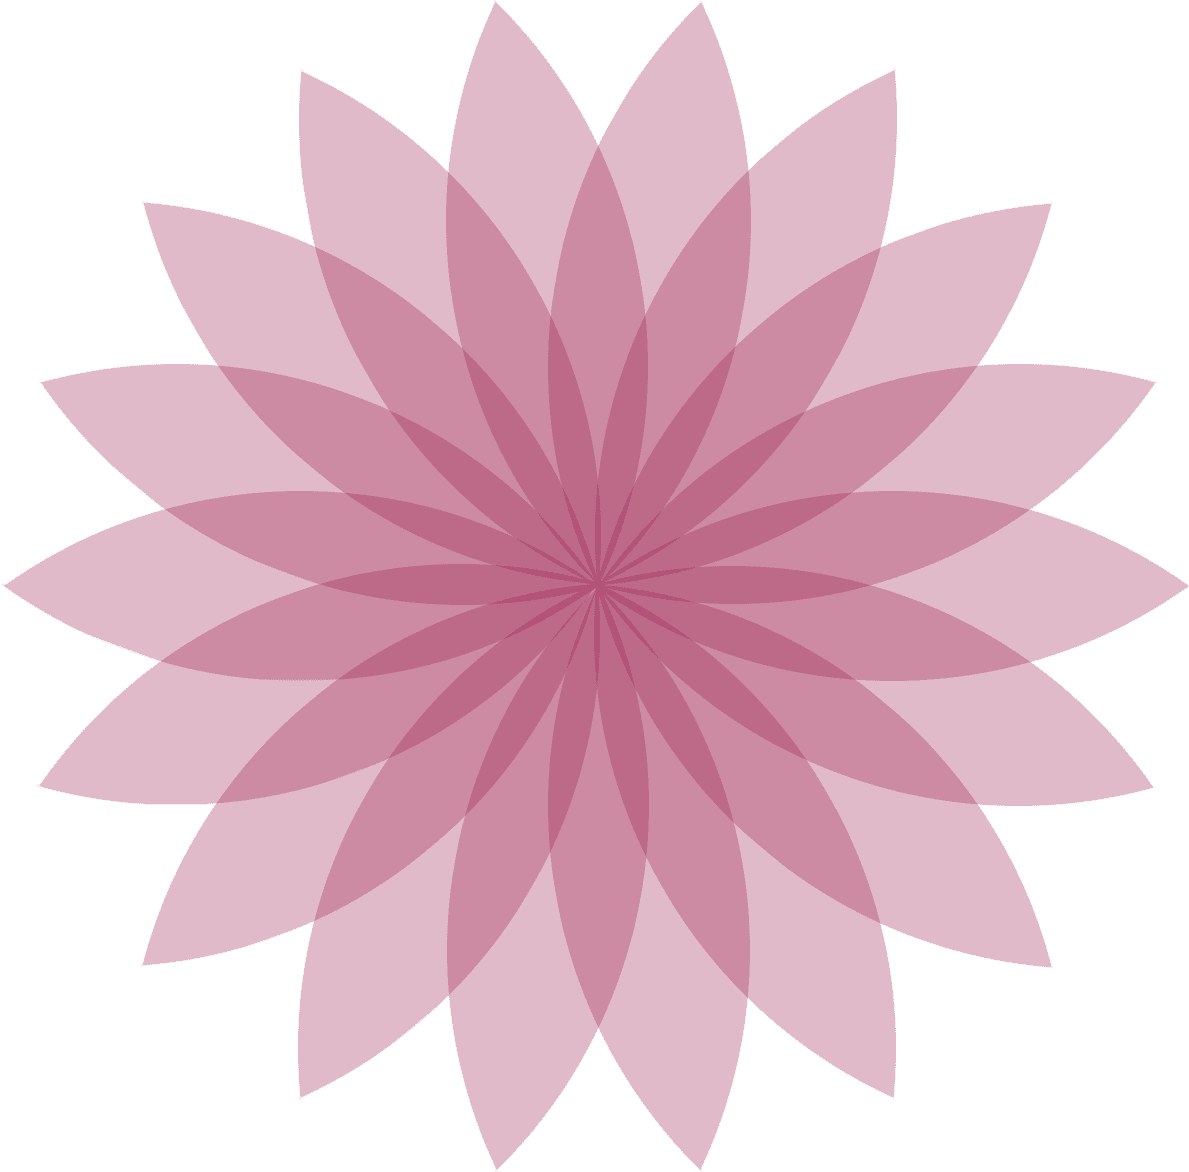 stylized lotus flower